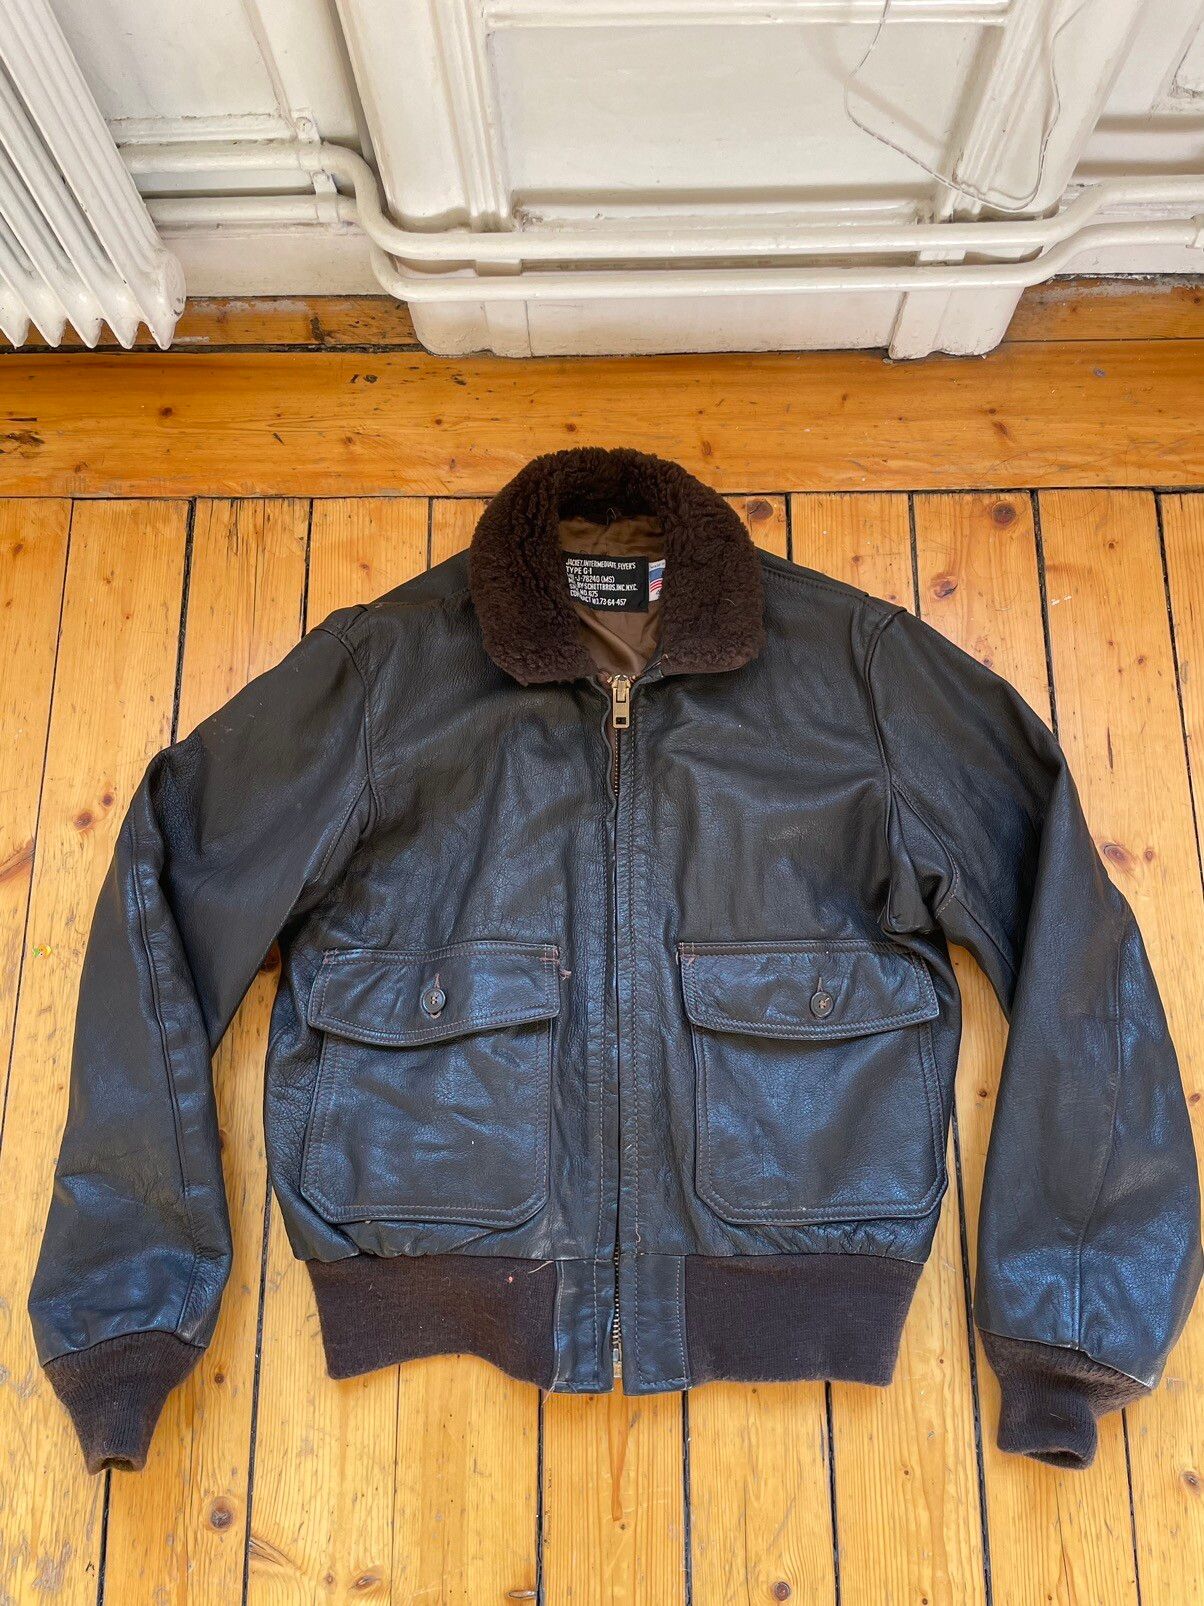 Schott Vintage Schott Bros NYC G1 Jacket 675, USN | Grailed